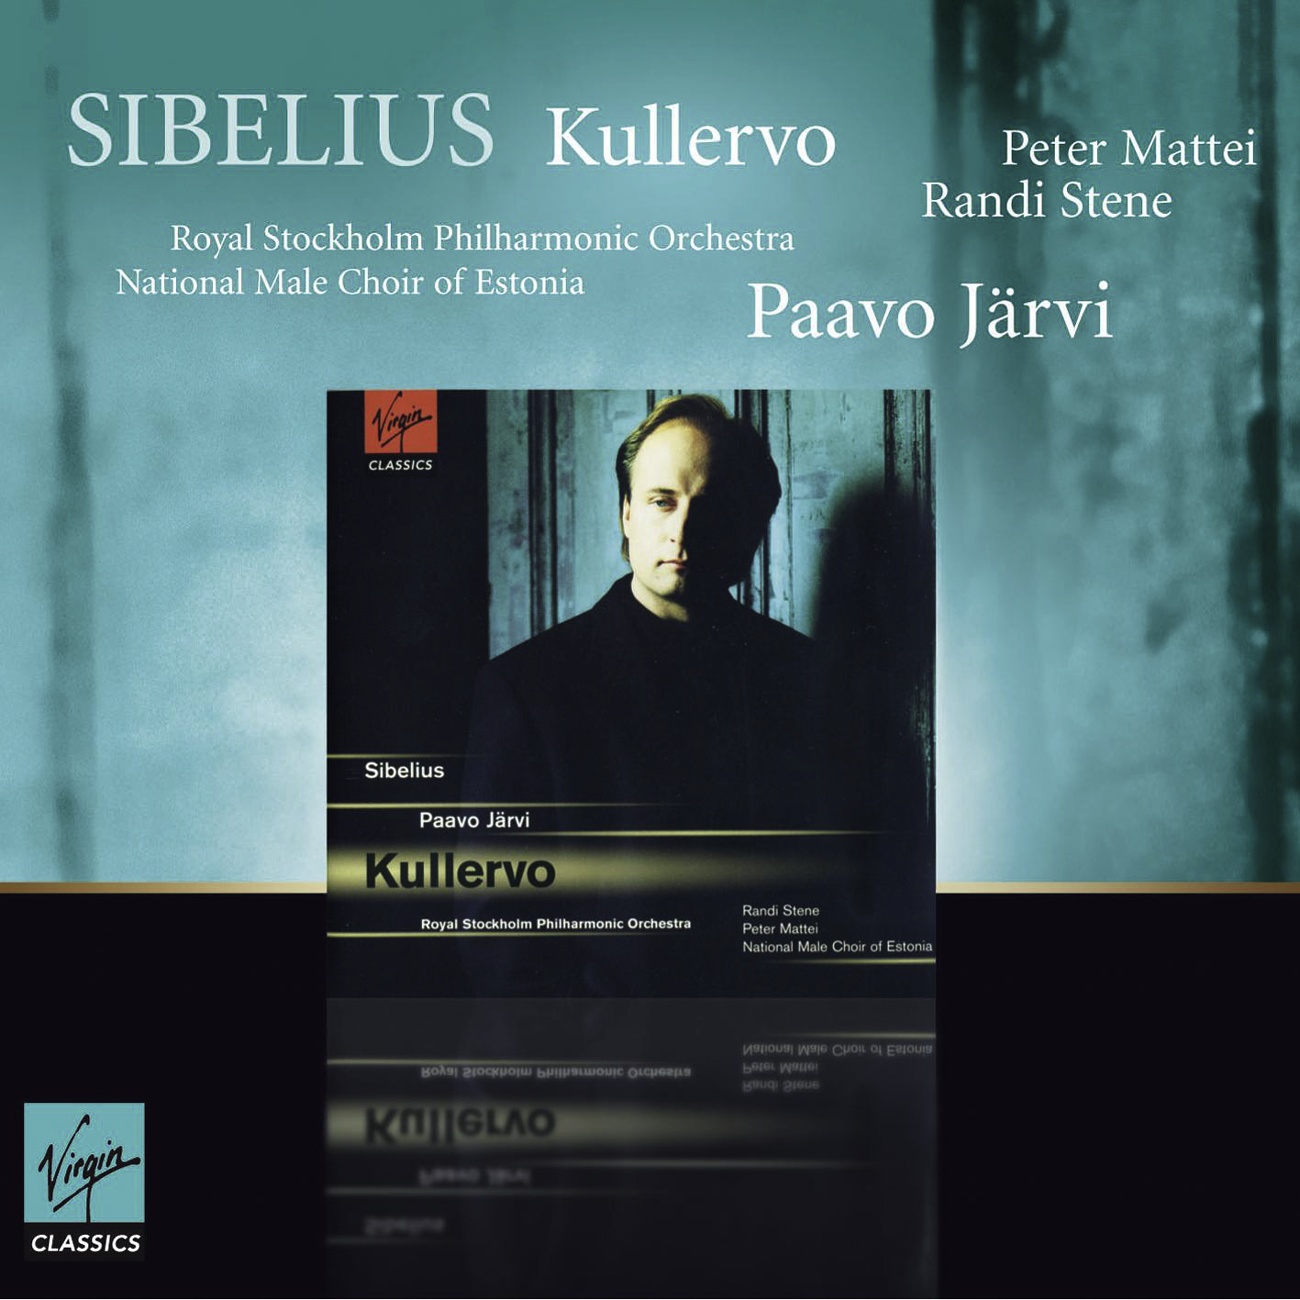 Kullervo - Symphonisches Gedicht, Op. 7, fur Soli, Chor und Orchester (Kalevala): II - Kullervo's ungdom (Kullervo's youth) - Grave